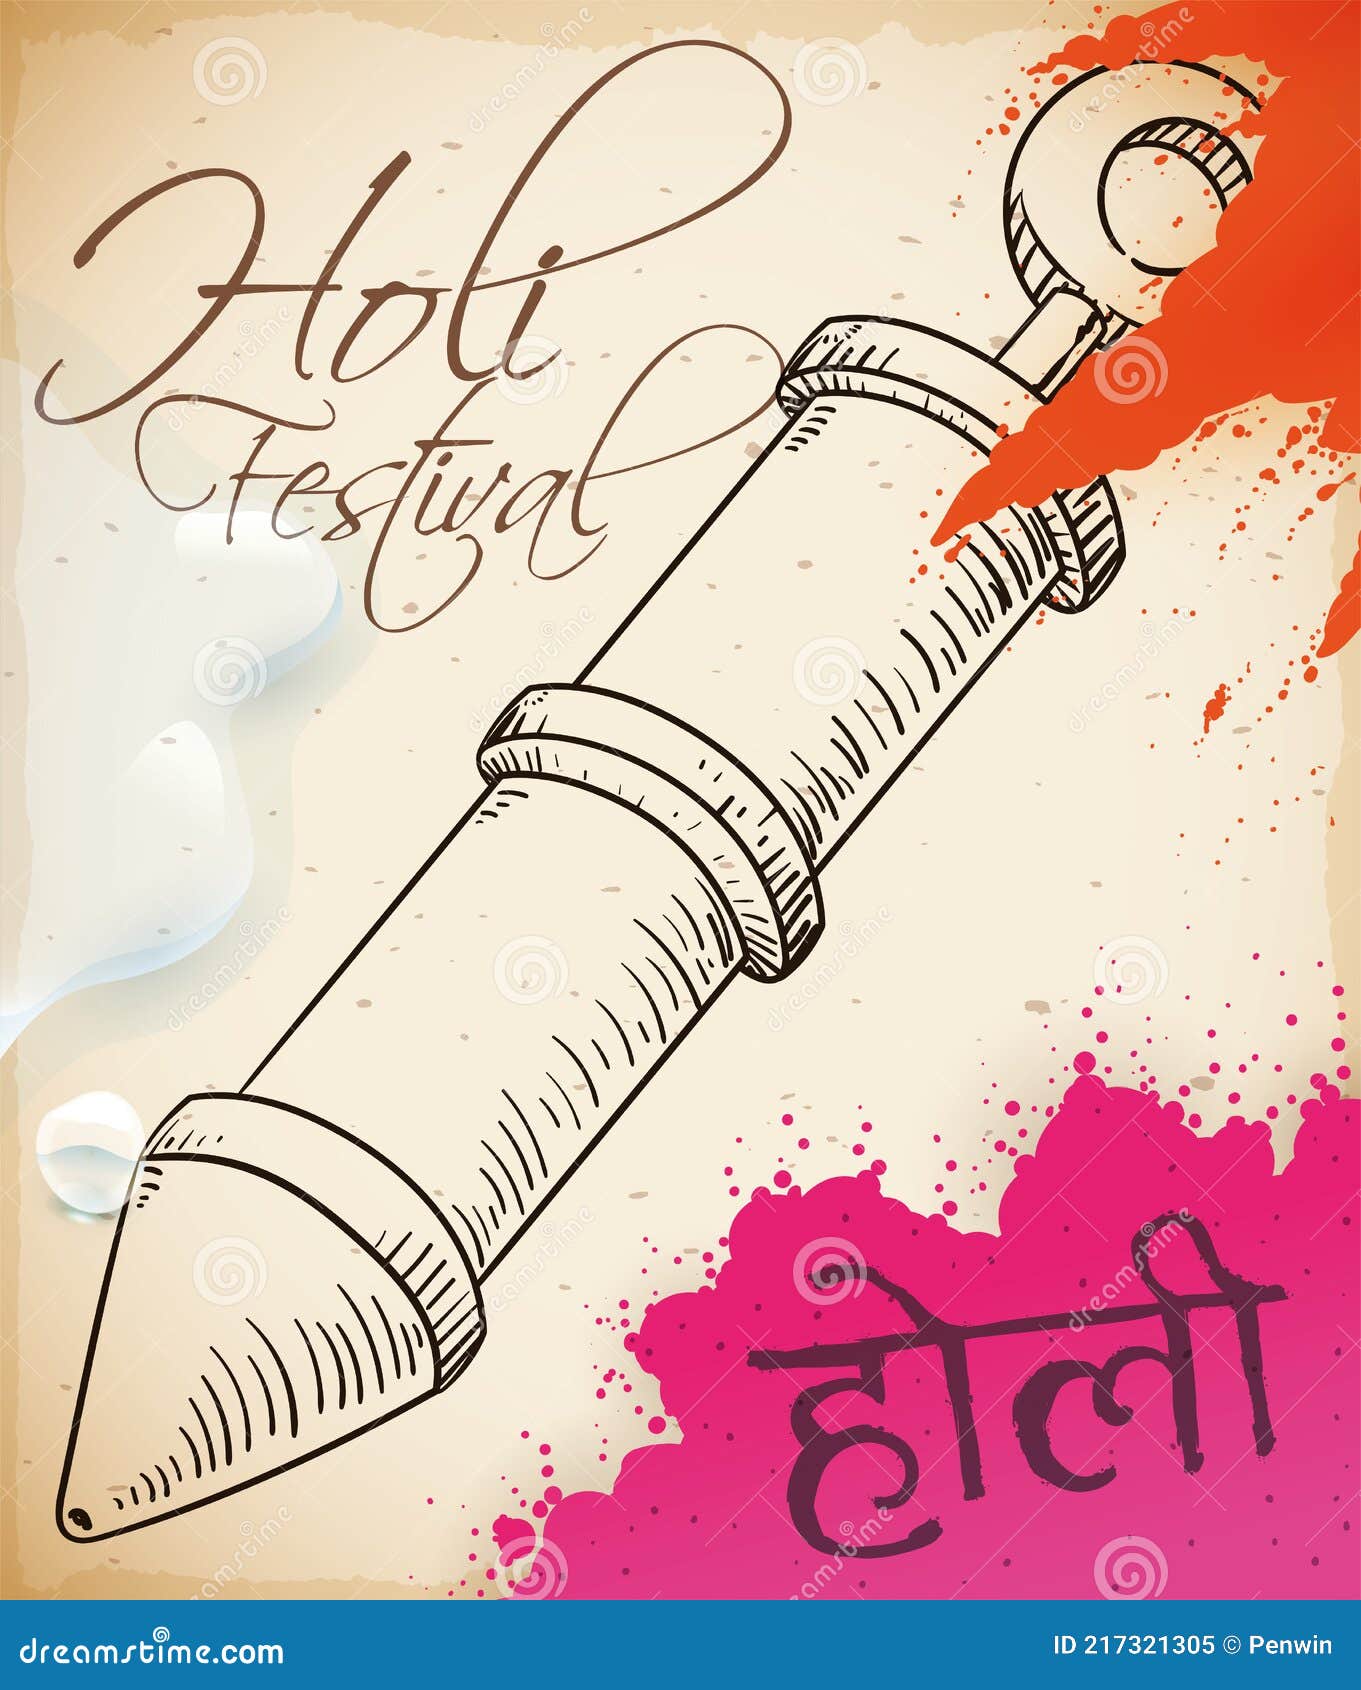 How To Draw Holi Festival Drawing|Holi Drawing|Easy Holi Drawing|ওরে ভাই  ফাগুন লেগেছে বনে বনে ড্রইং - YouTube